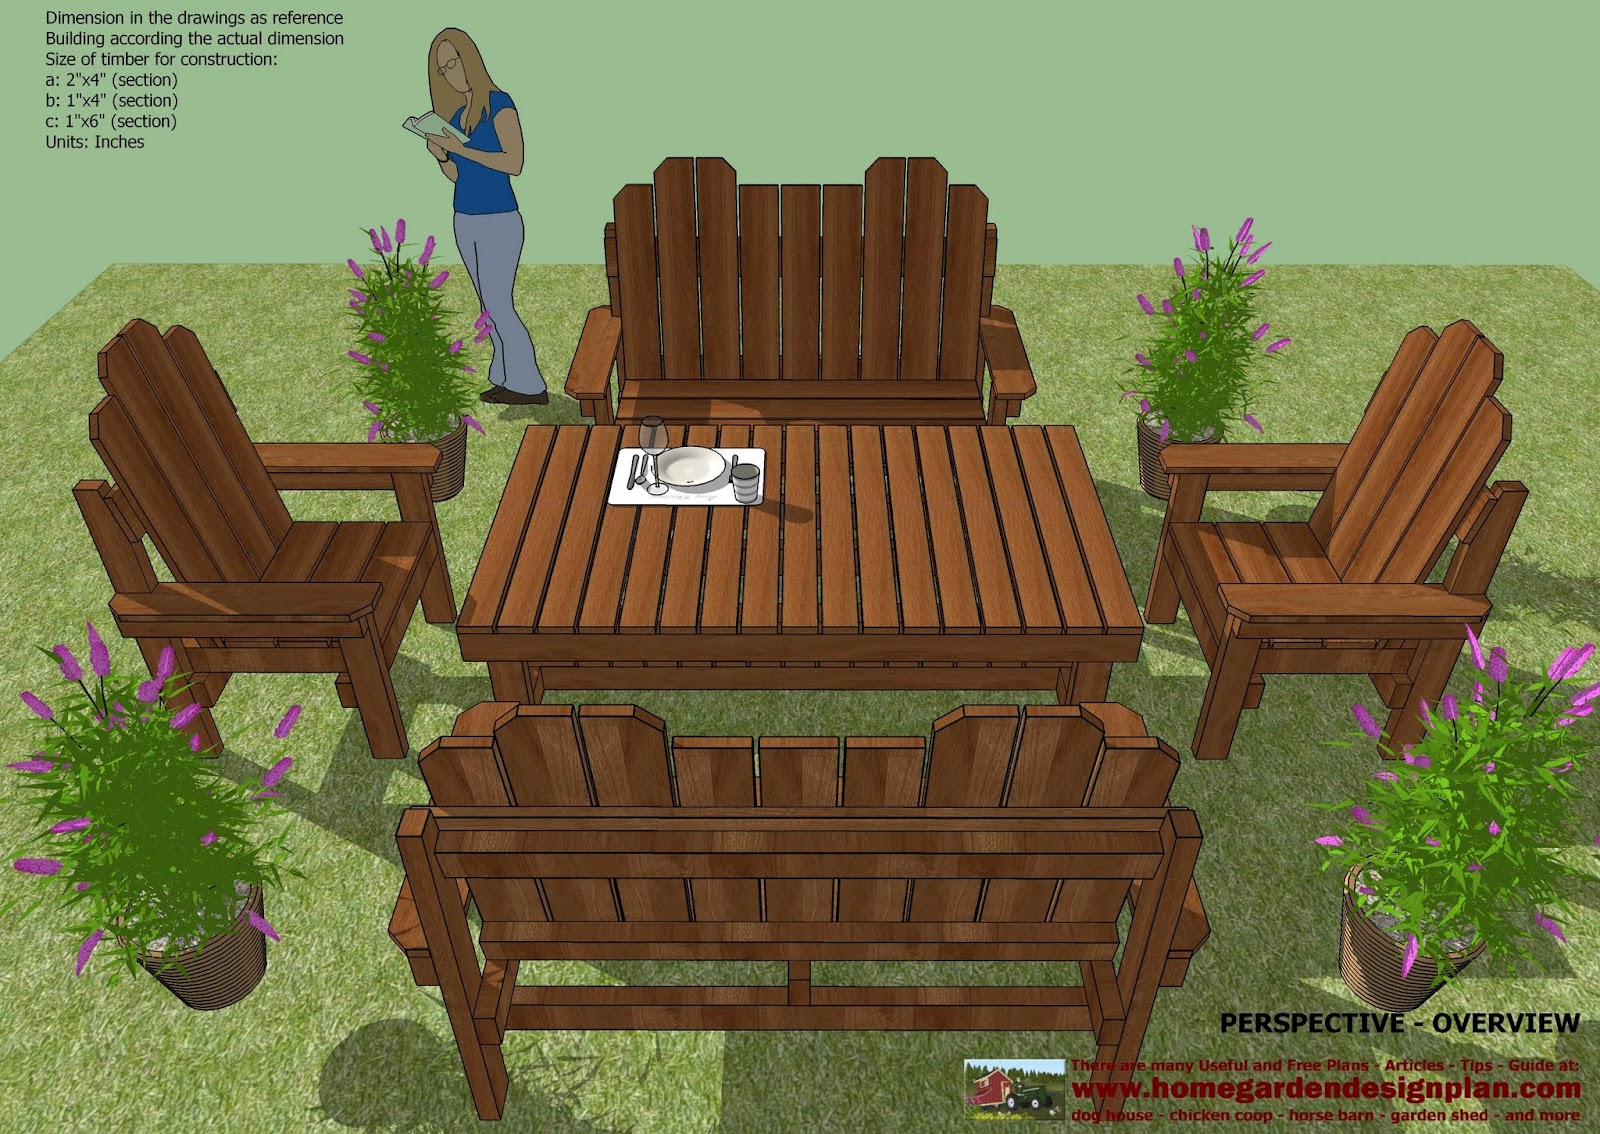  Garden Teak Table Plans - Out Door Furniture Plans - Woodworking Plans